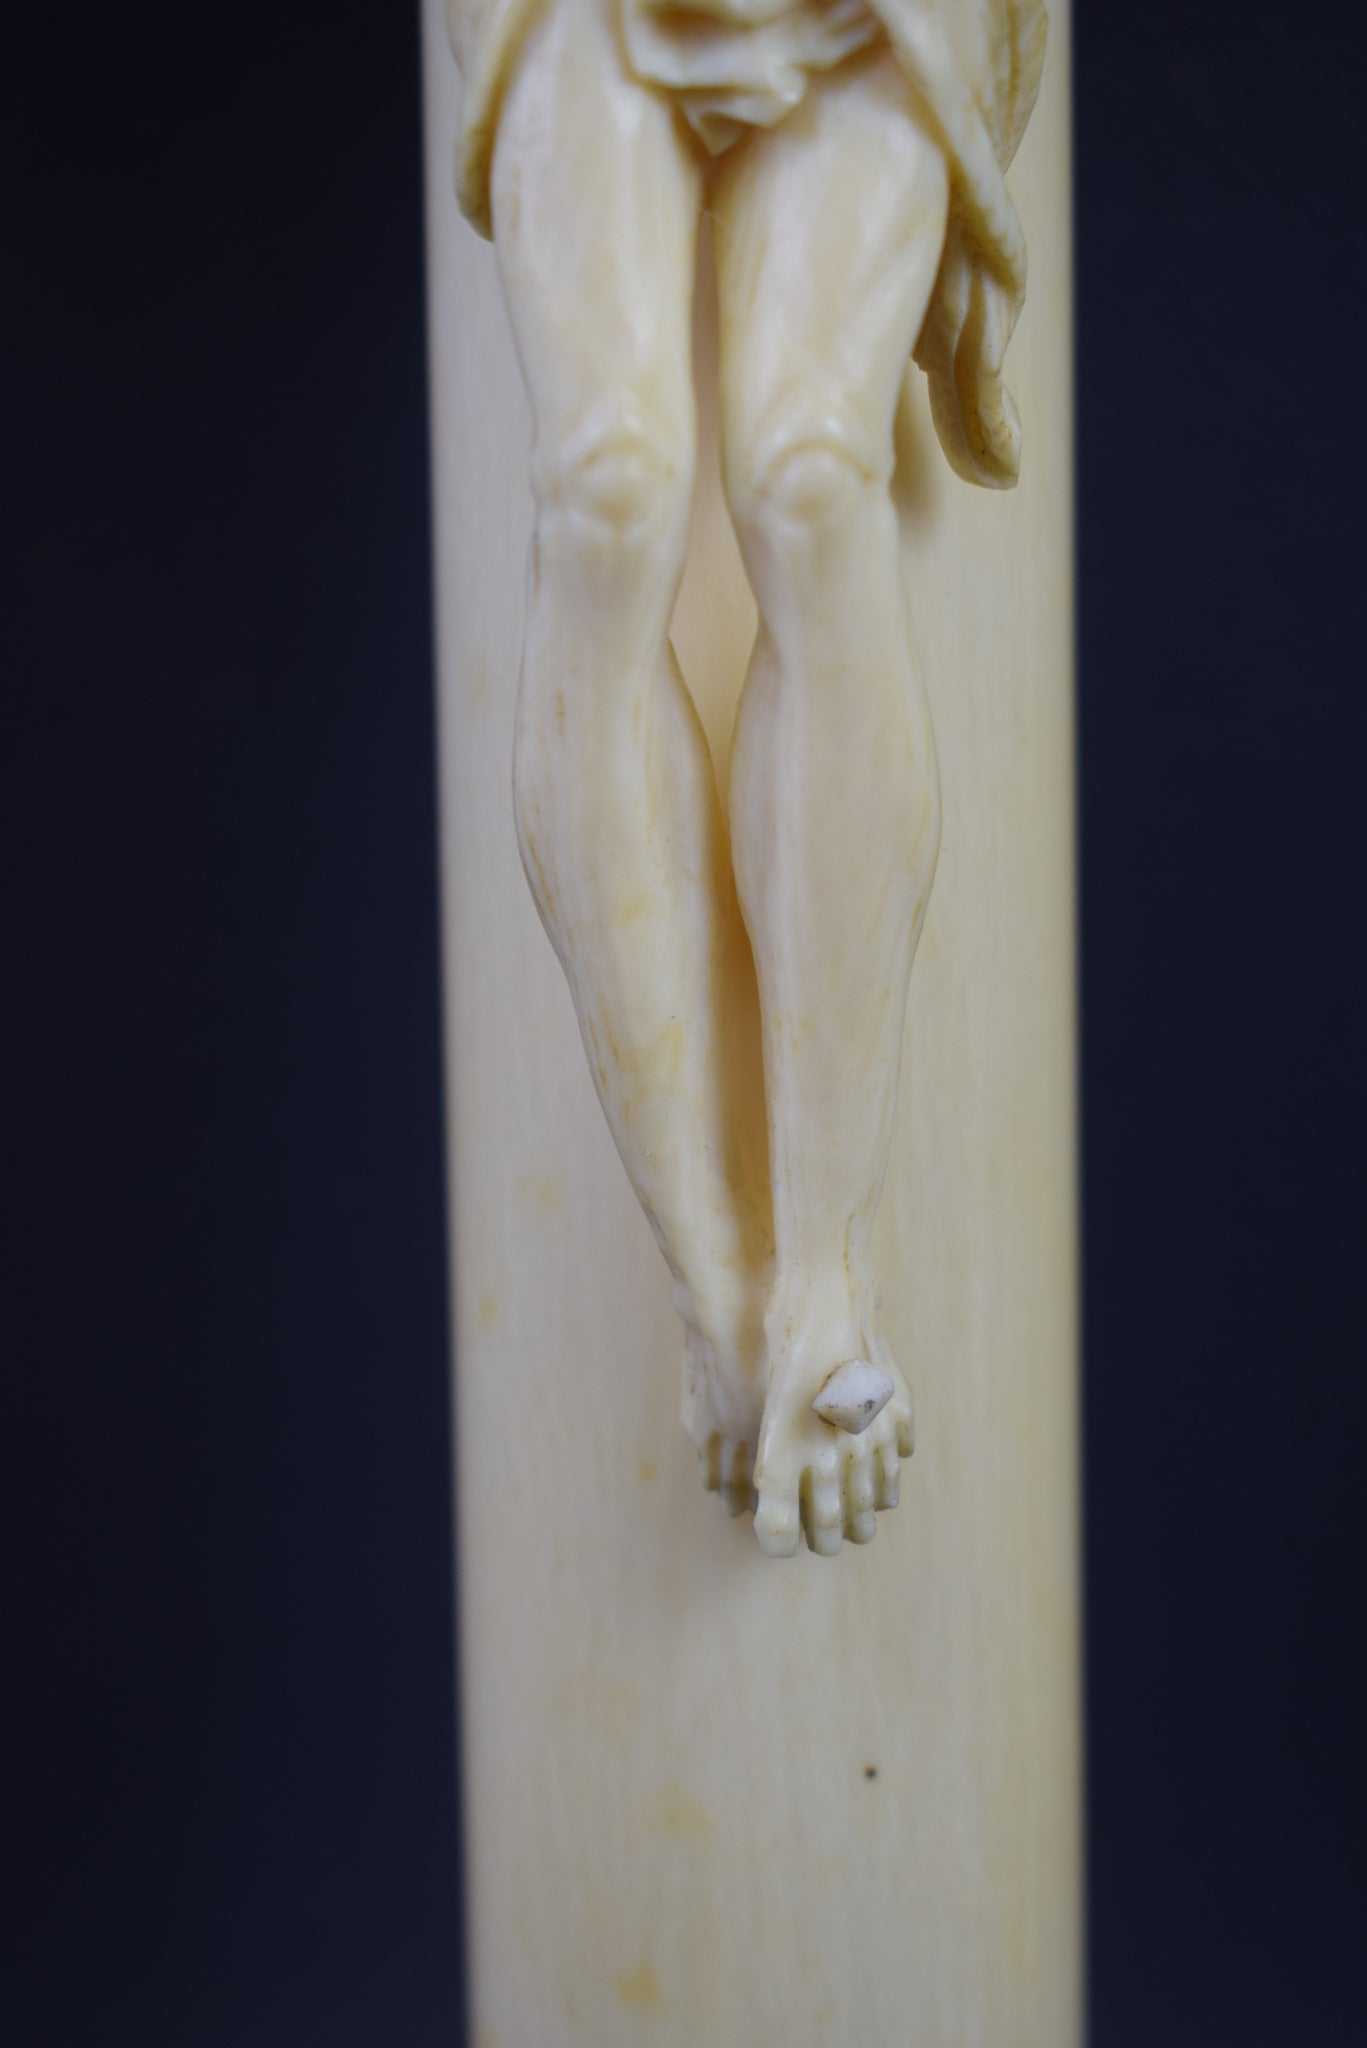 Ivory crucifix 19th